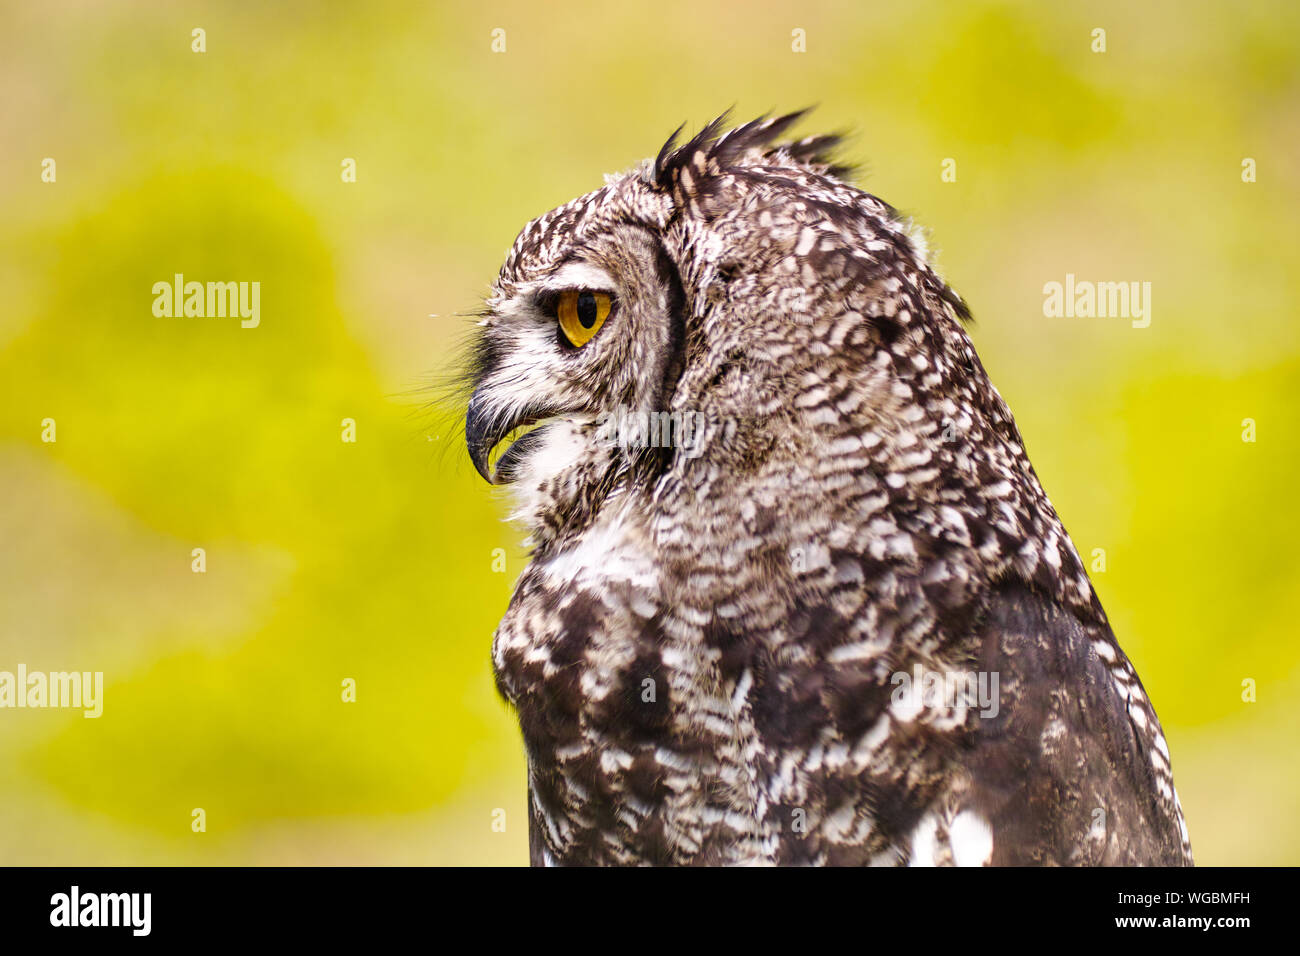 Great Horned Owl, Bubo Virginianus Subarcticus, portrait Stock Photo